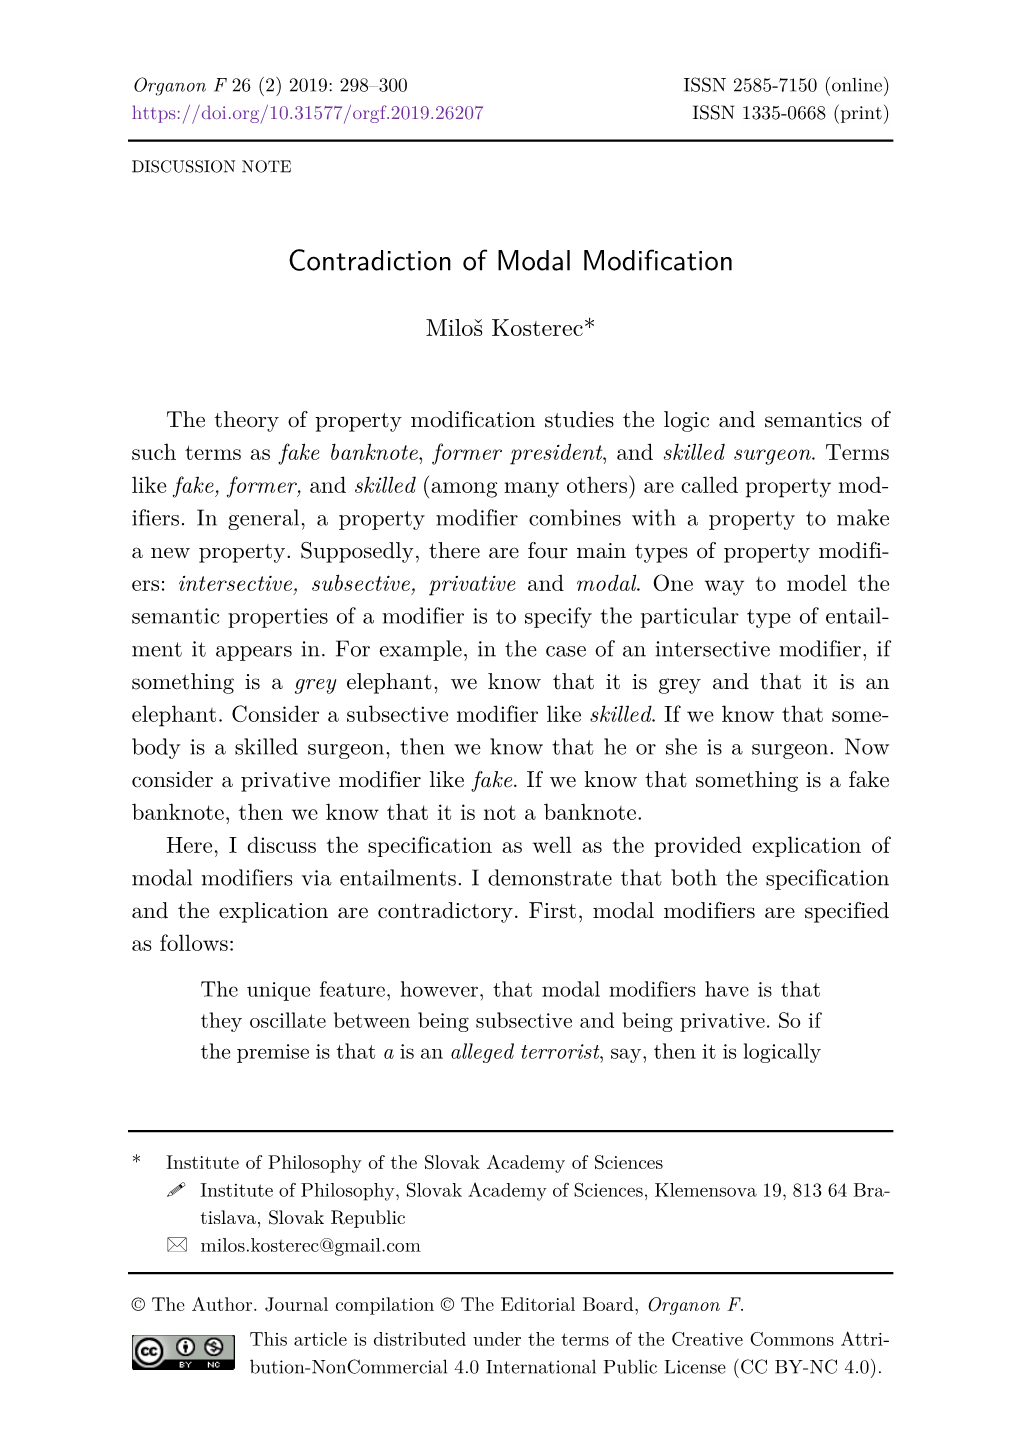 Contradiction of Modal Modification